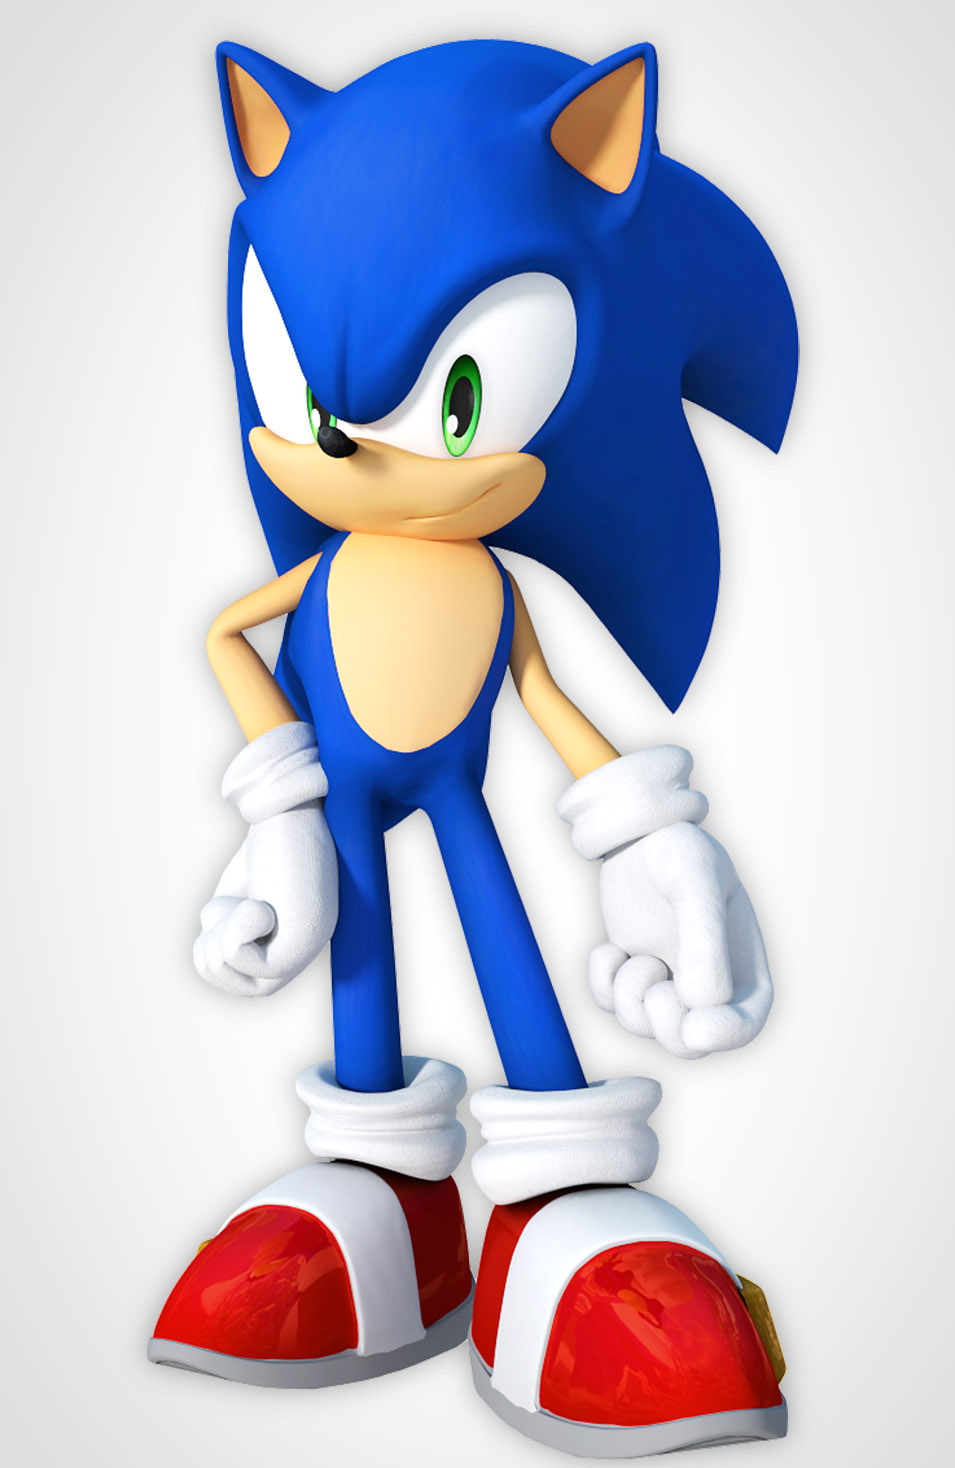 Classic Sonic Advance Pose by FinnAkira on deviantART